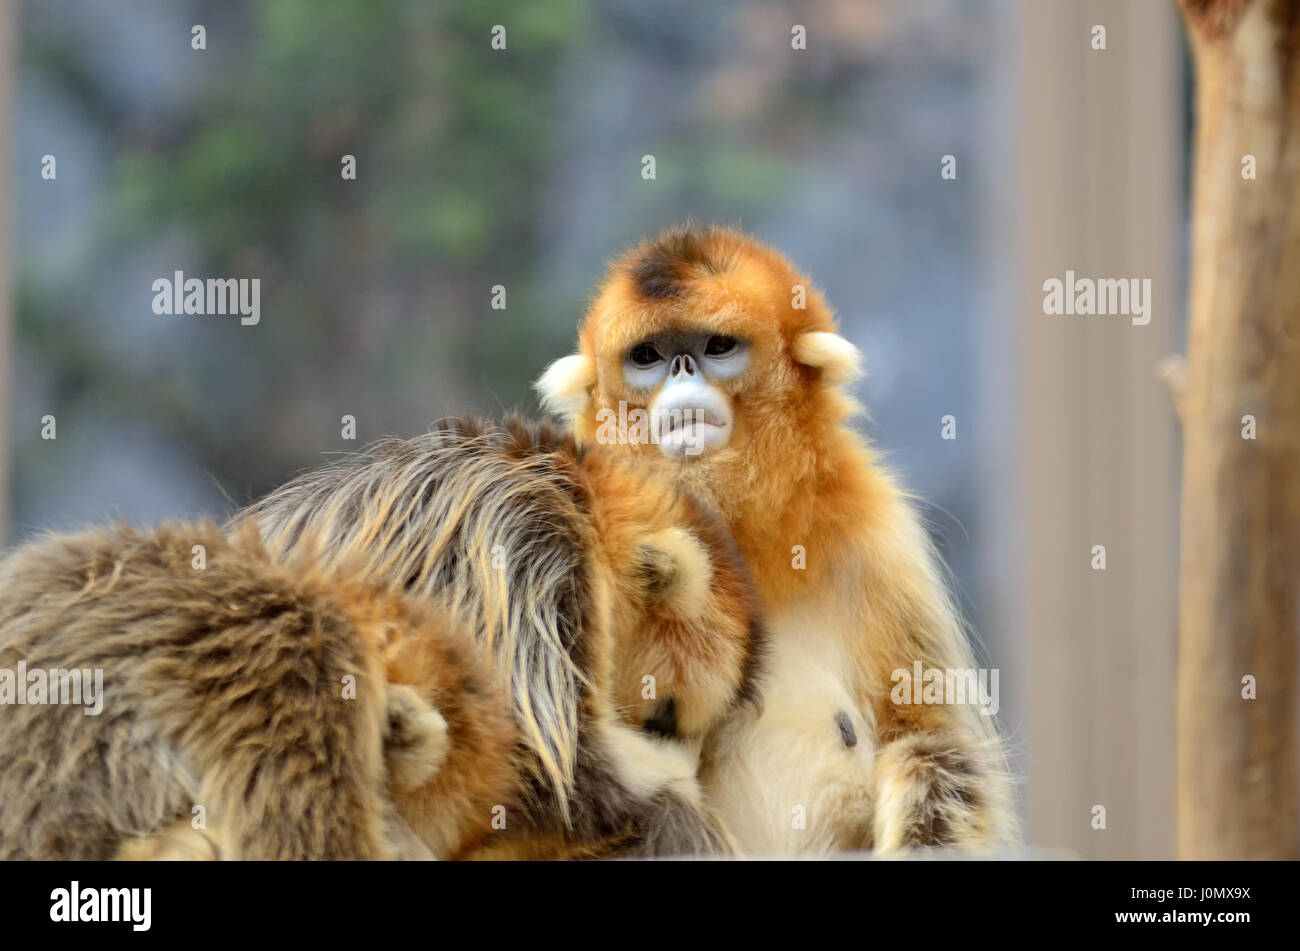 Goldene stupsnasige Affe selektiven Fokus Stockfoto